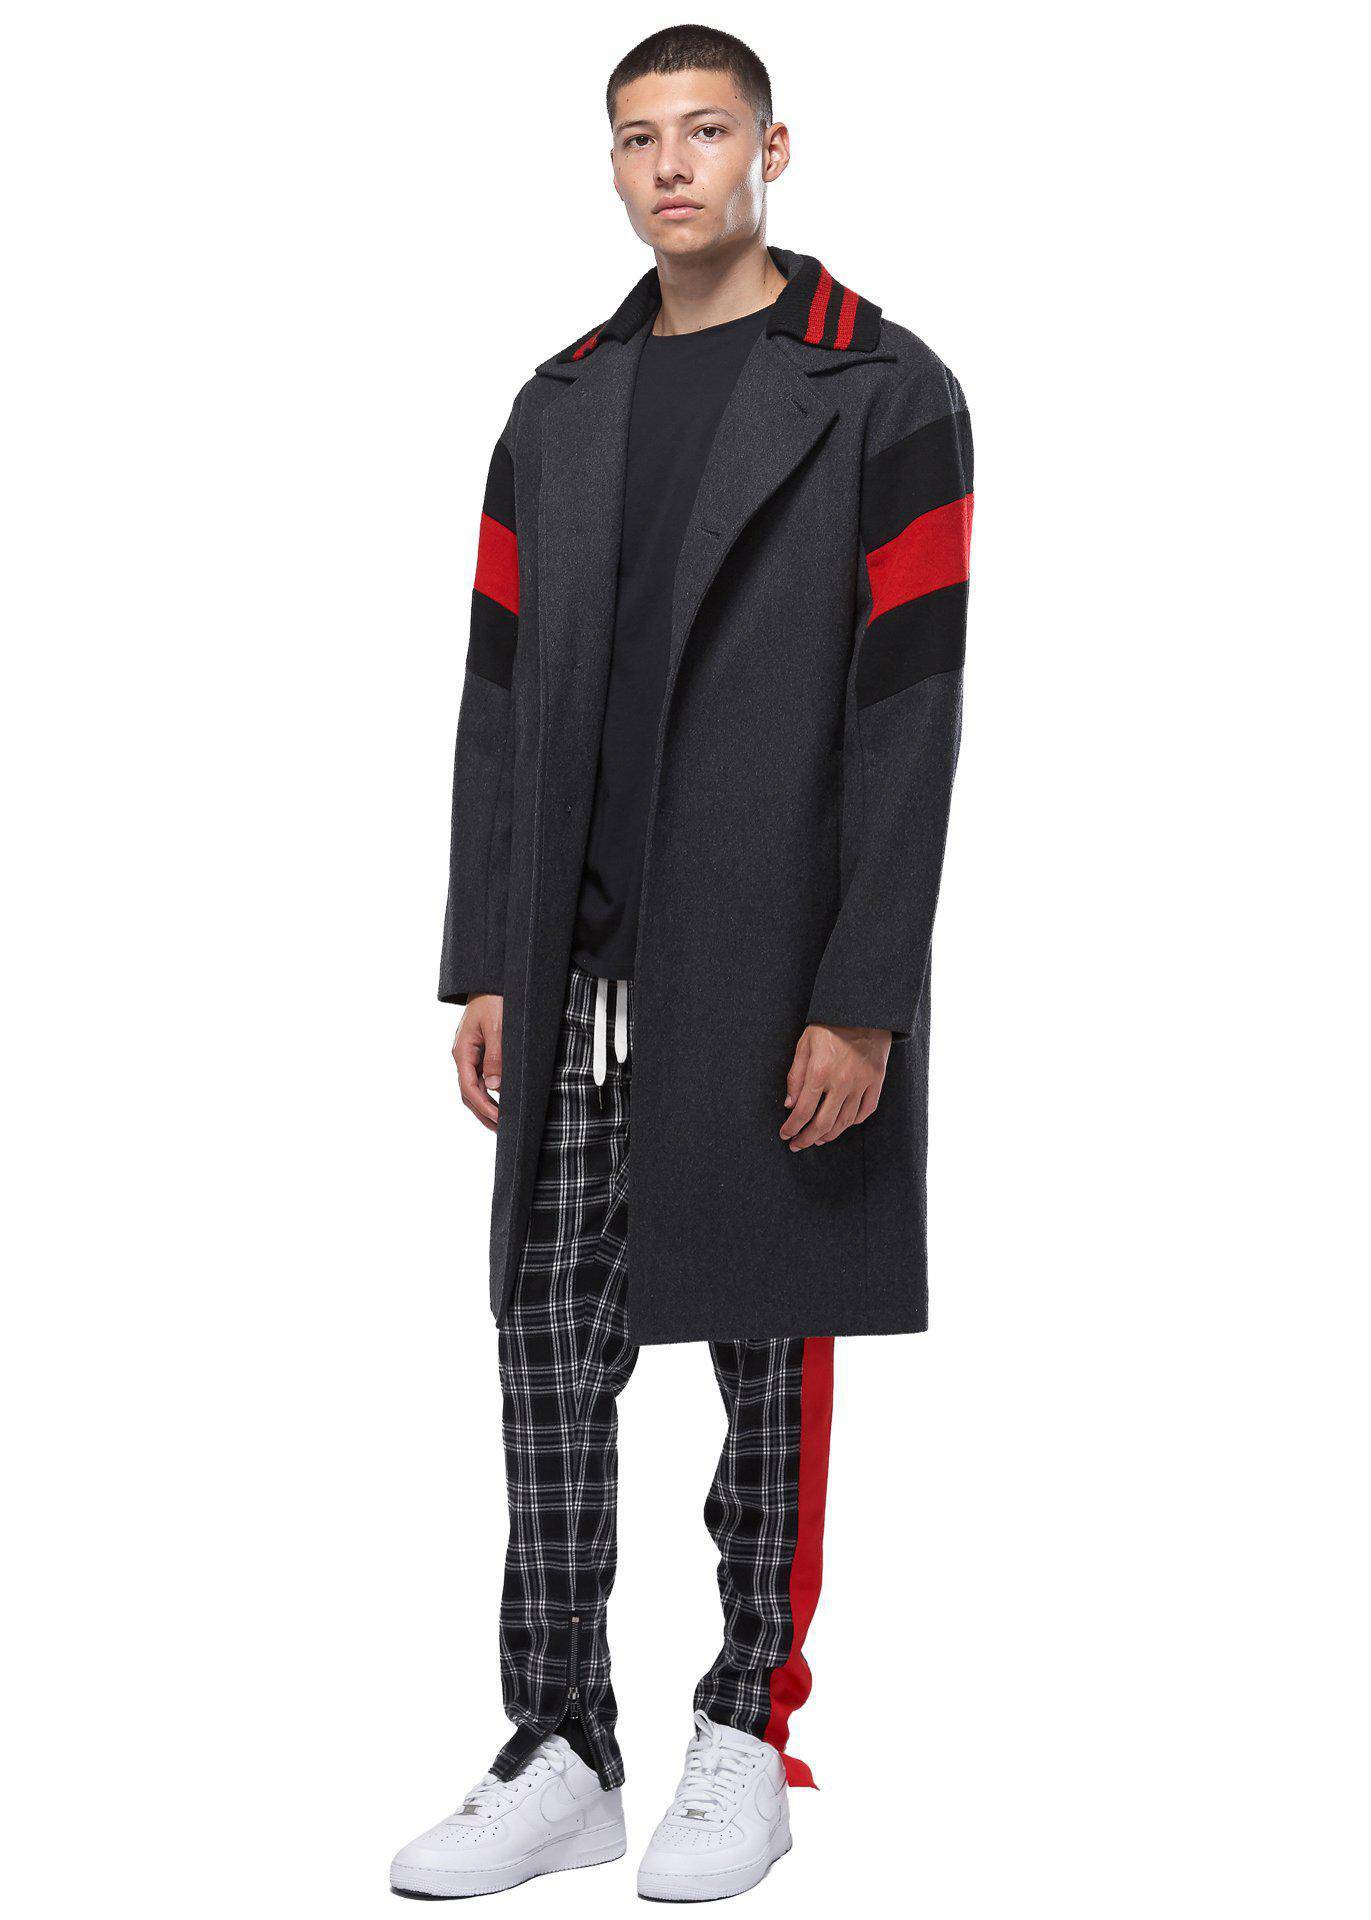 Konus Men's Wool Blend Long Coat with Contrast Stripes in Charcoal